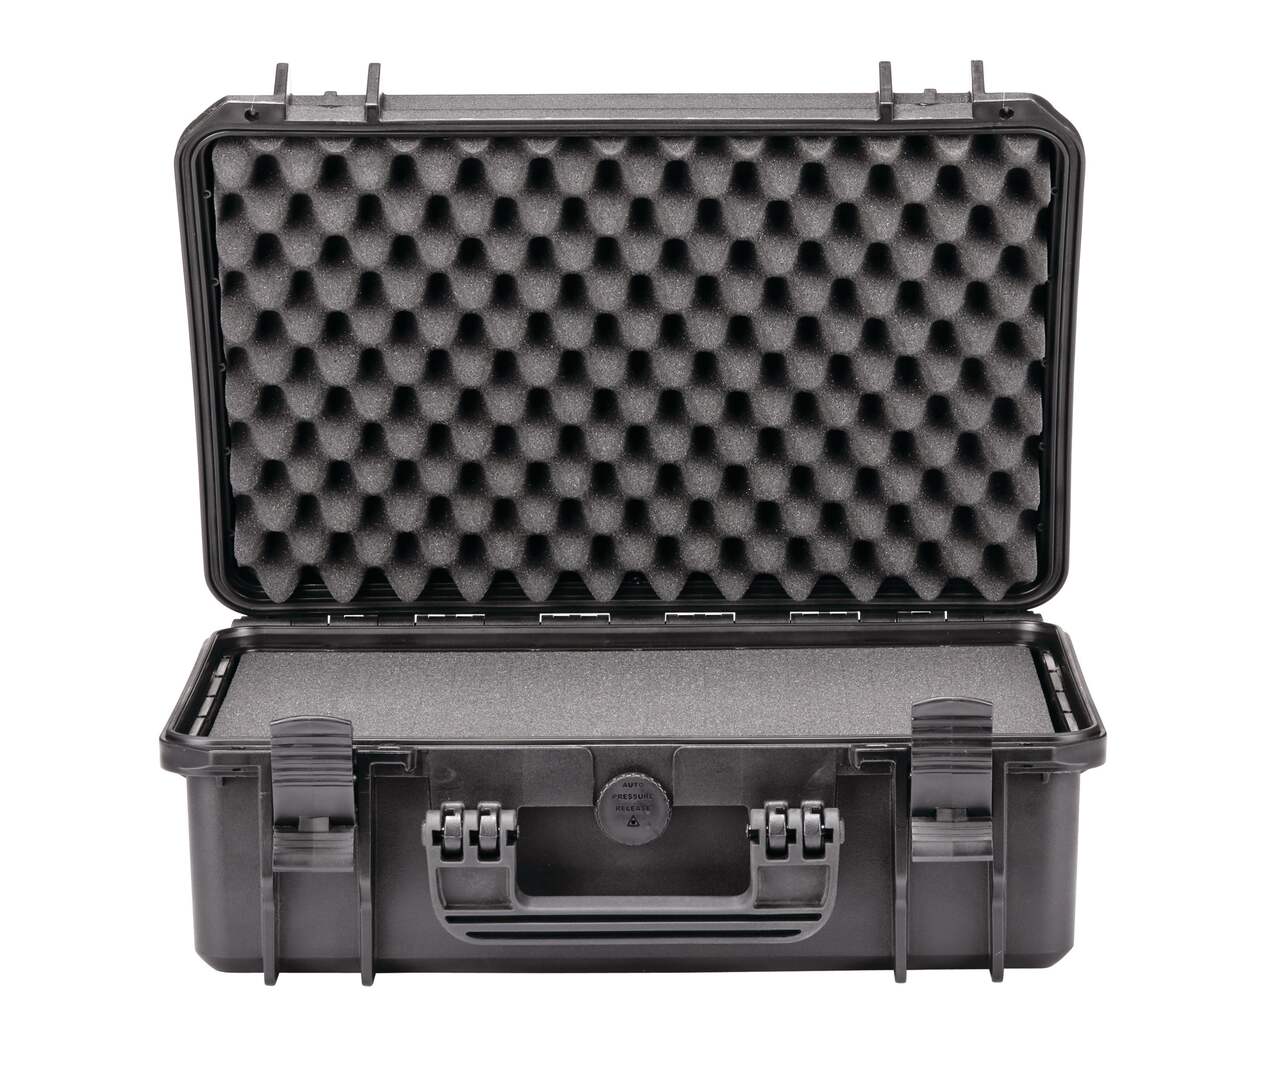 MAXIMUM Portable IP67 Waterproof Case/ Tool Box with Foam Layers